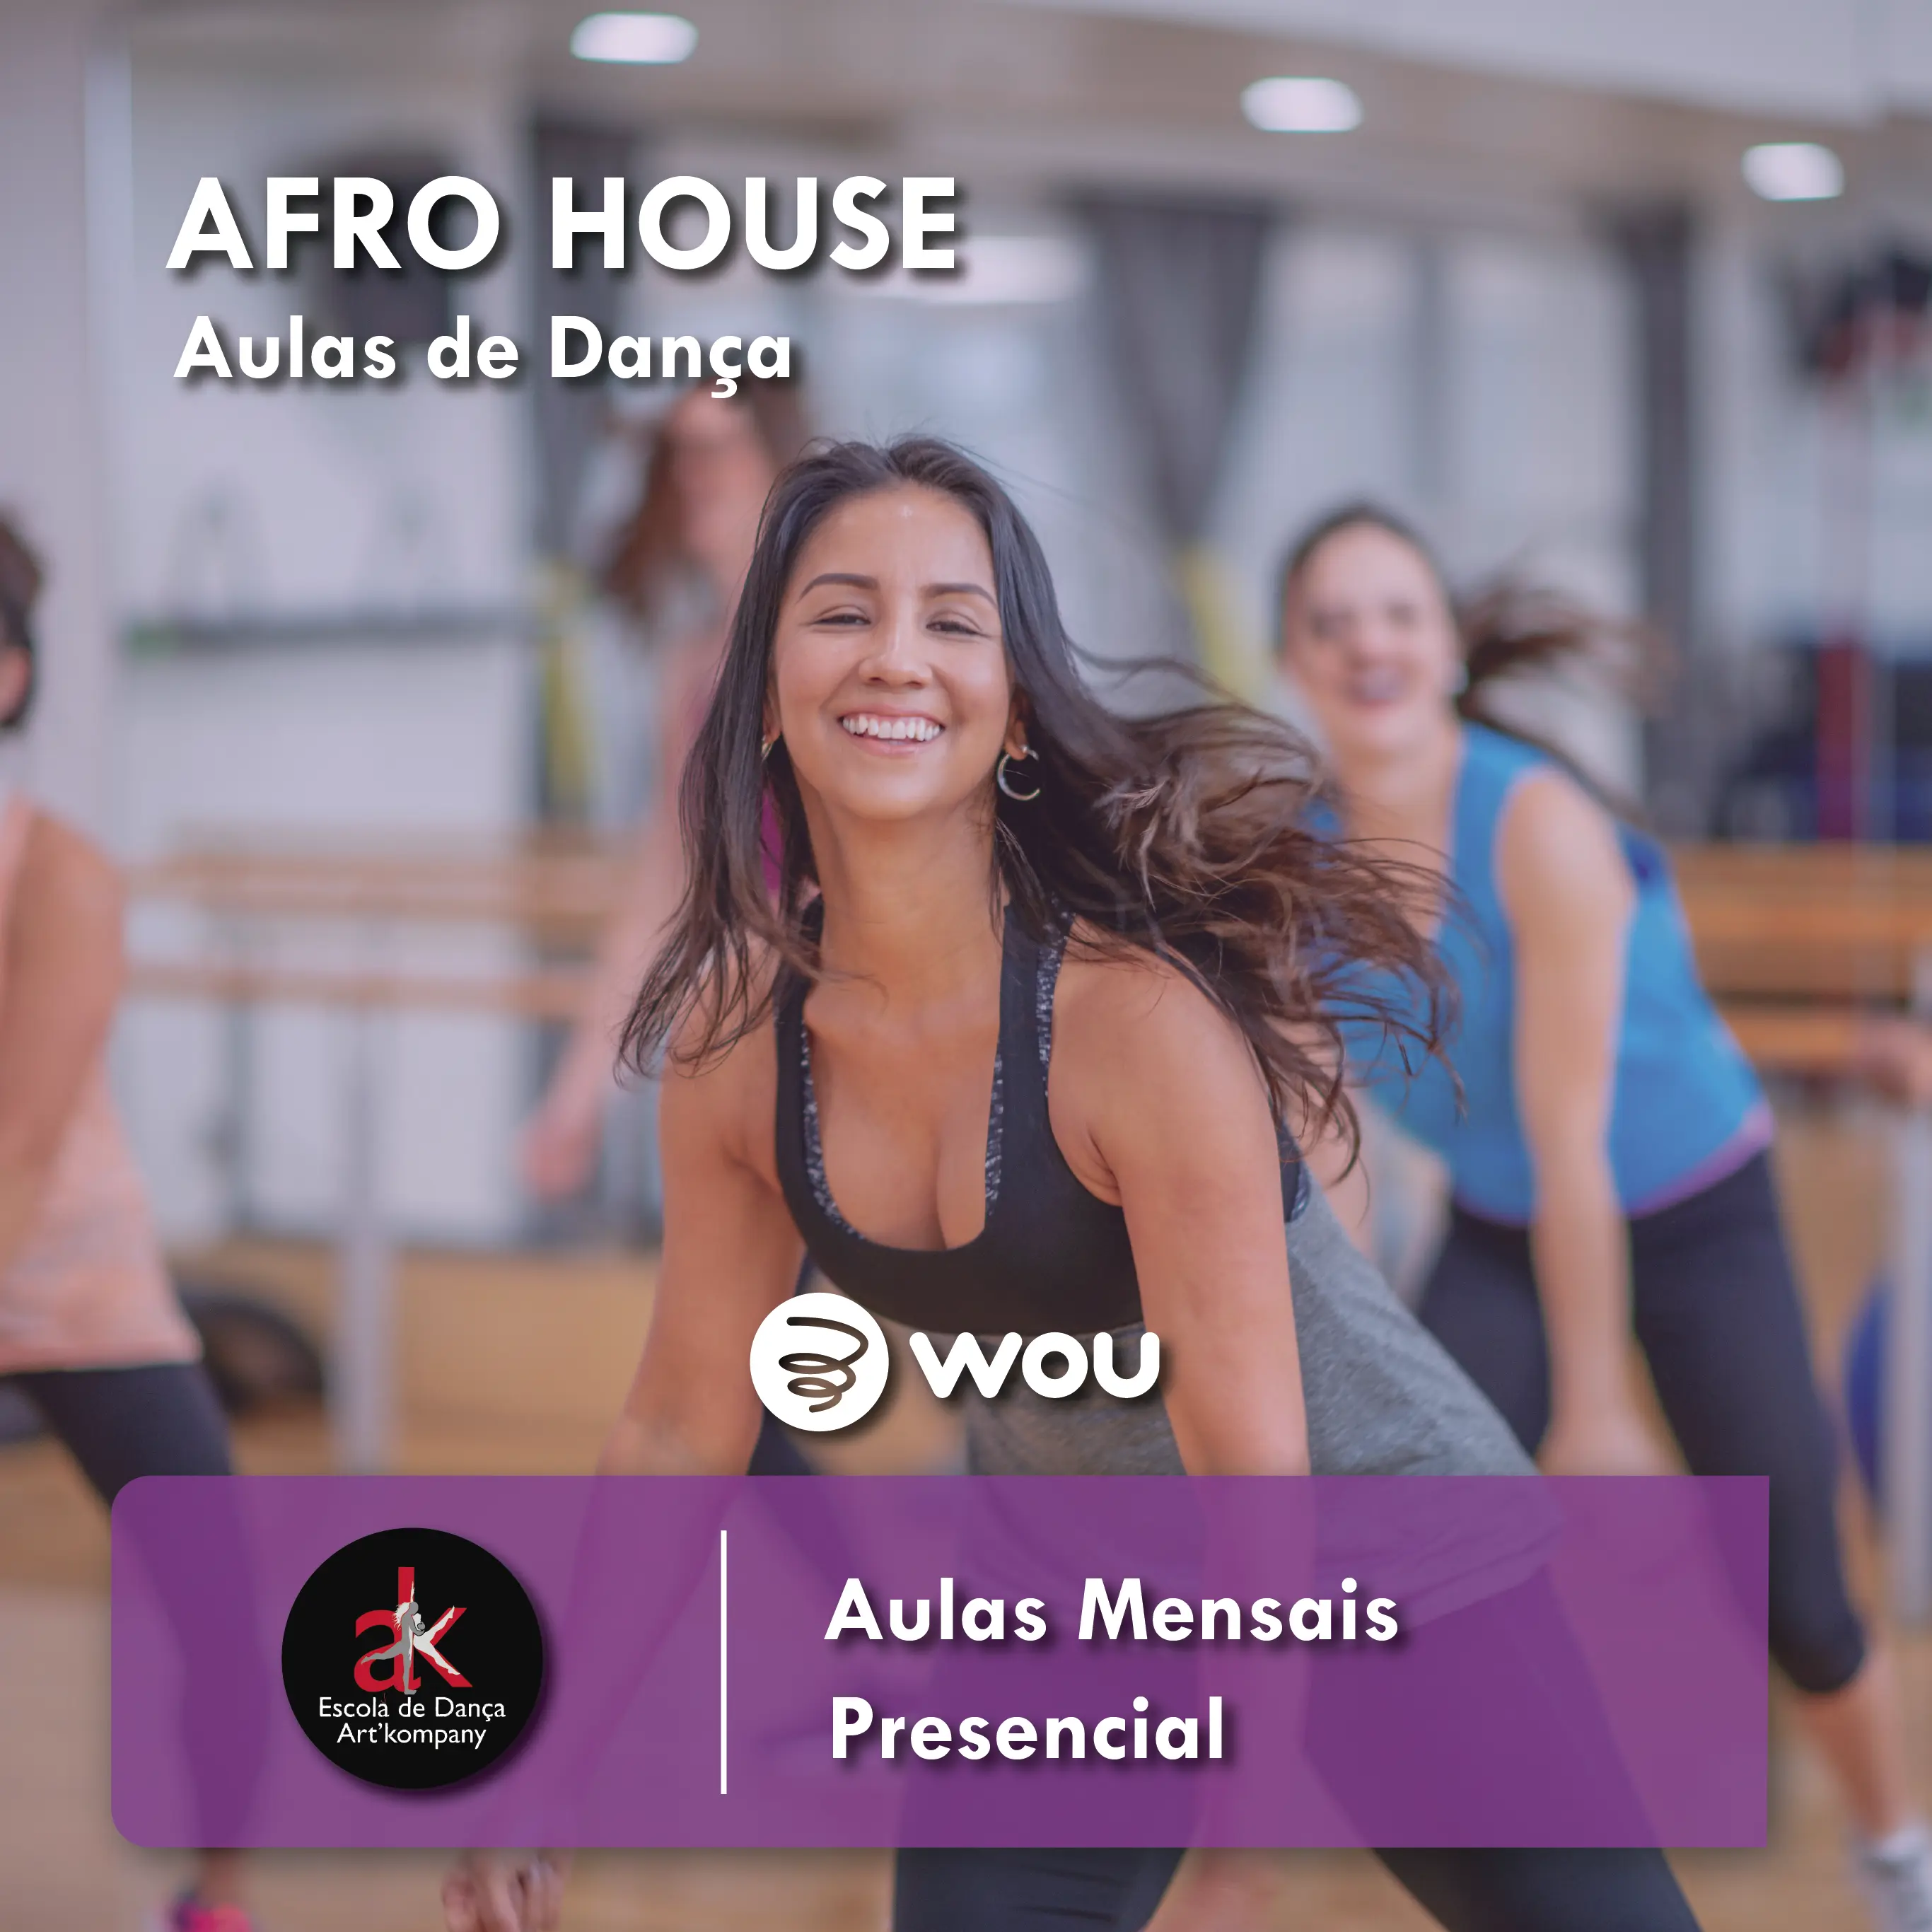 Afro House classes in Castelo Branco